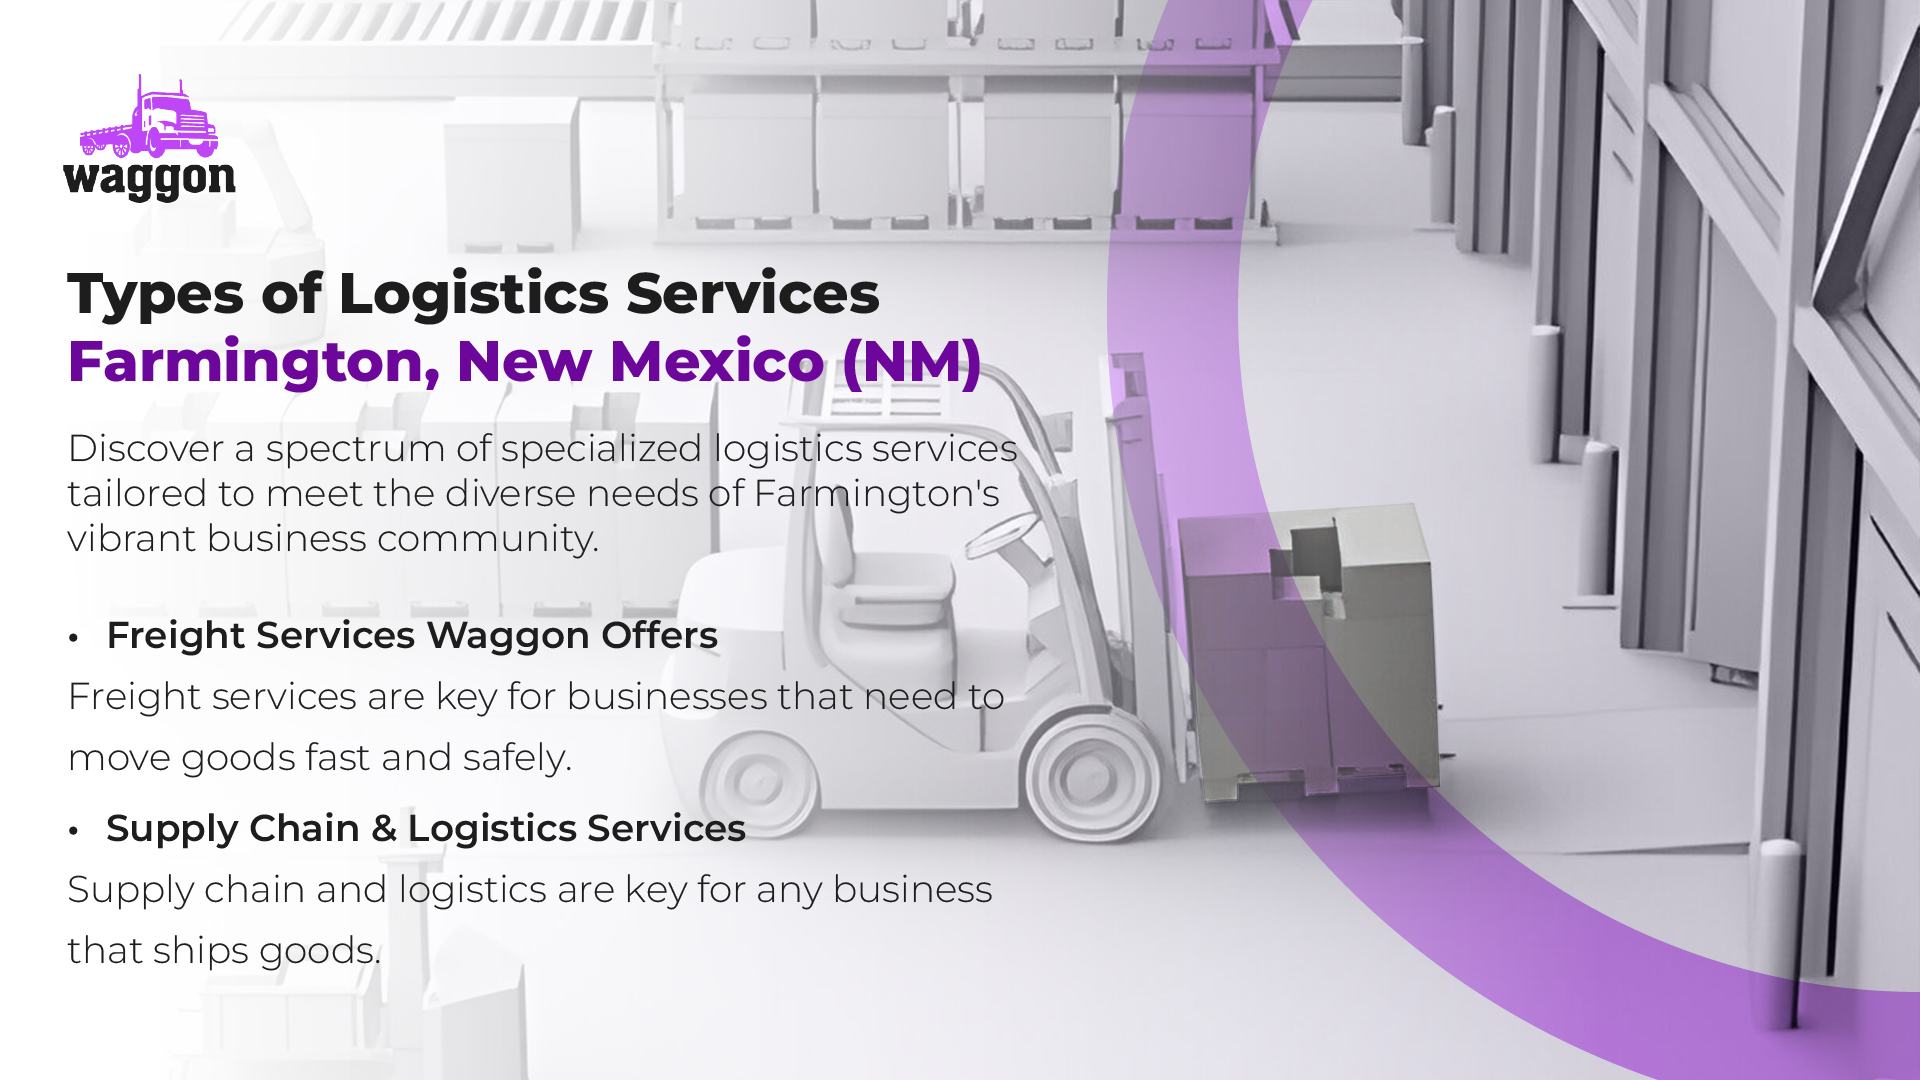 Types of Logistics Services in Farmington, New Mexico (NM)